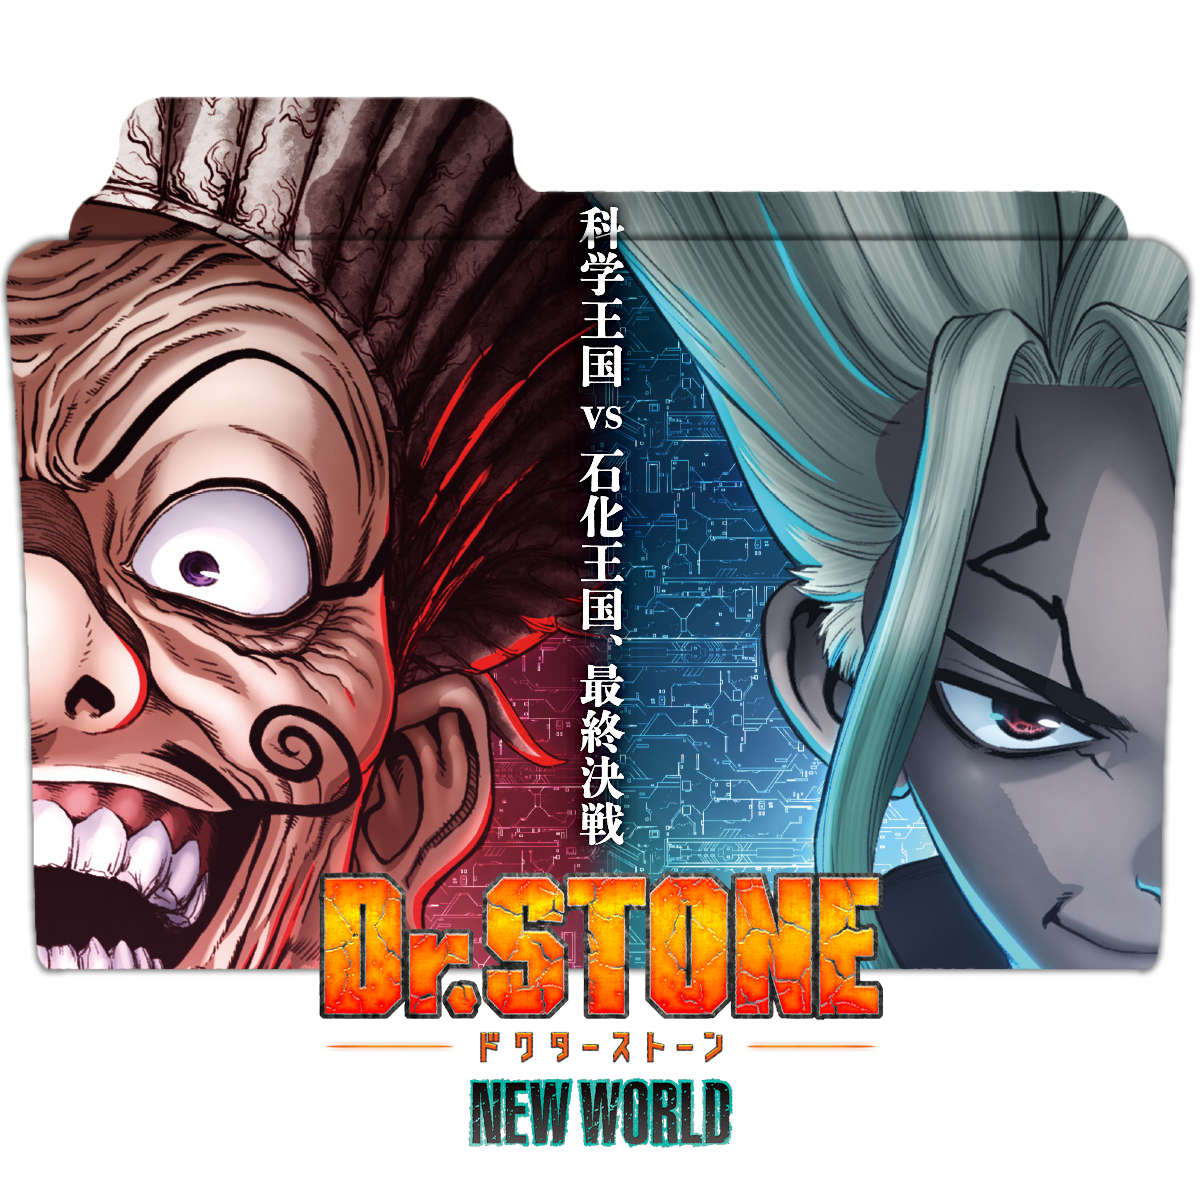 Dr Stone New World Part 2 - Folder Icon by Zunopziz on DeviantArt